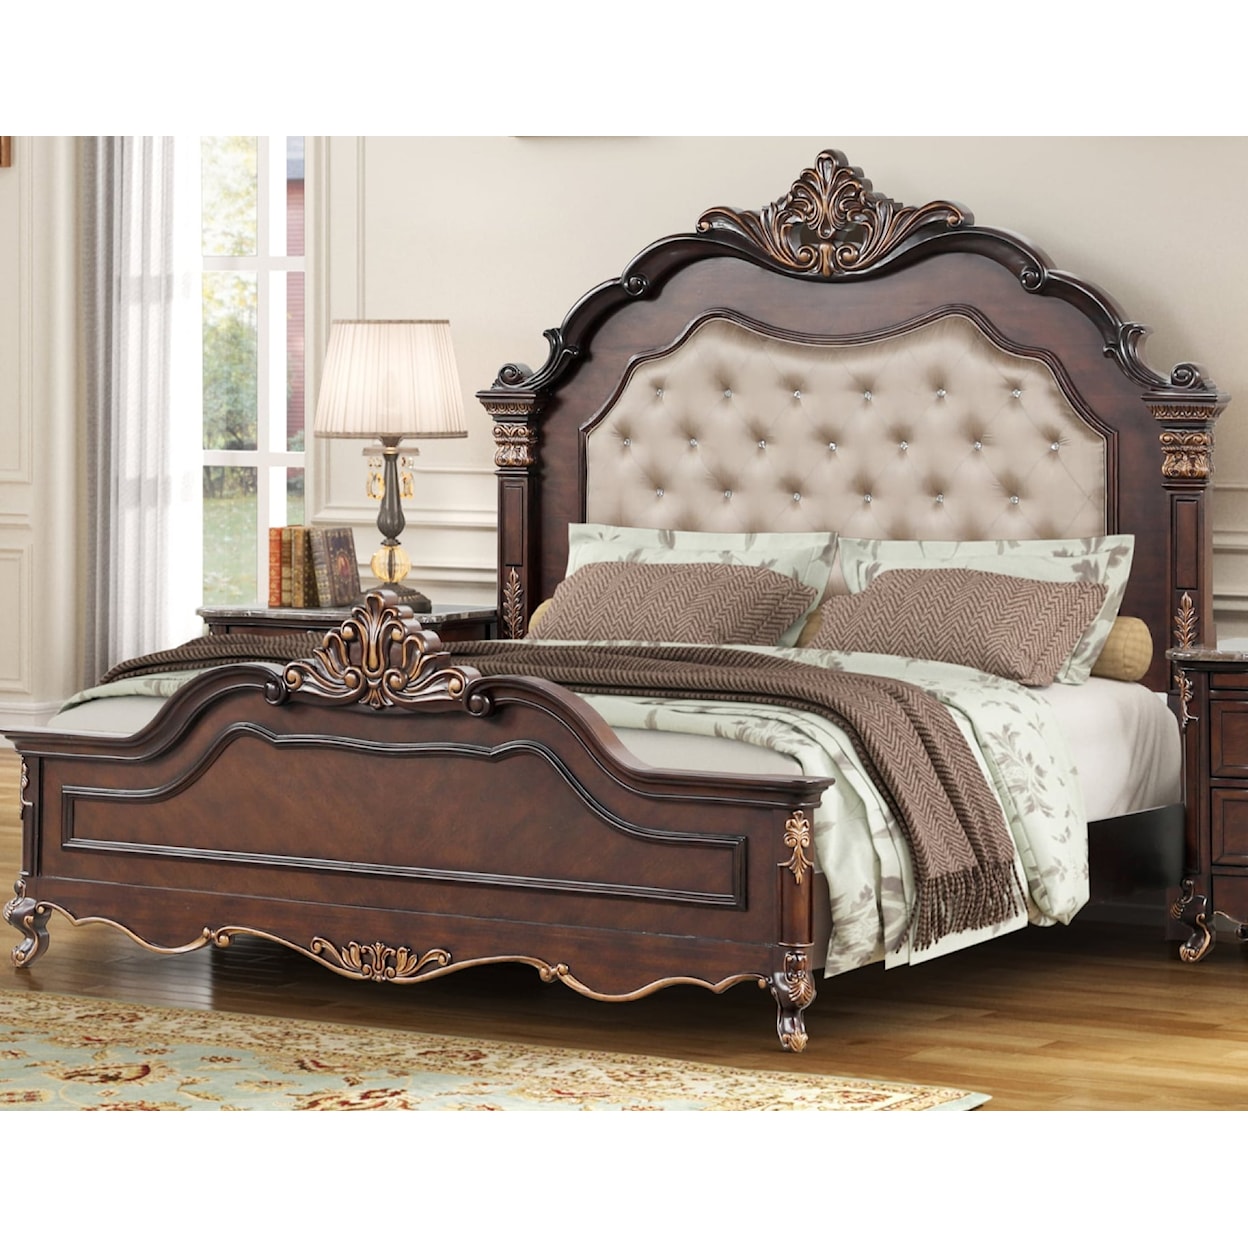 New Classic Furniture Constantine Bed Queen